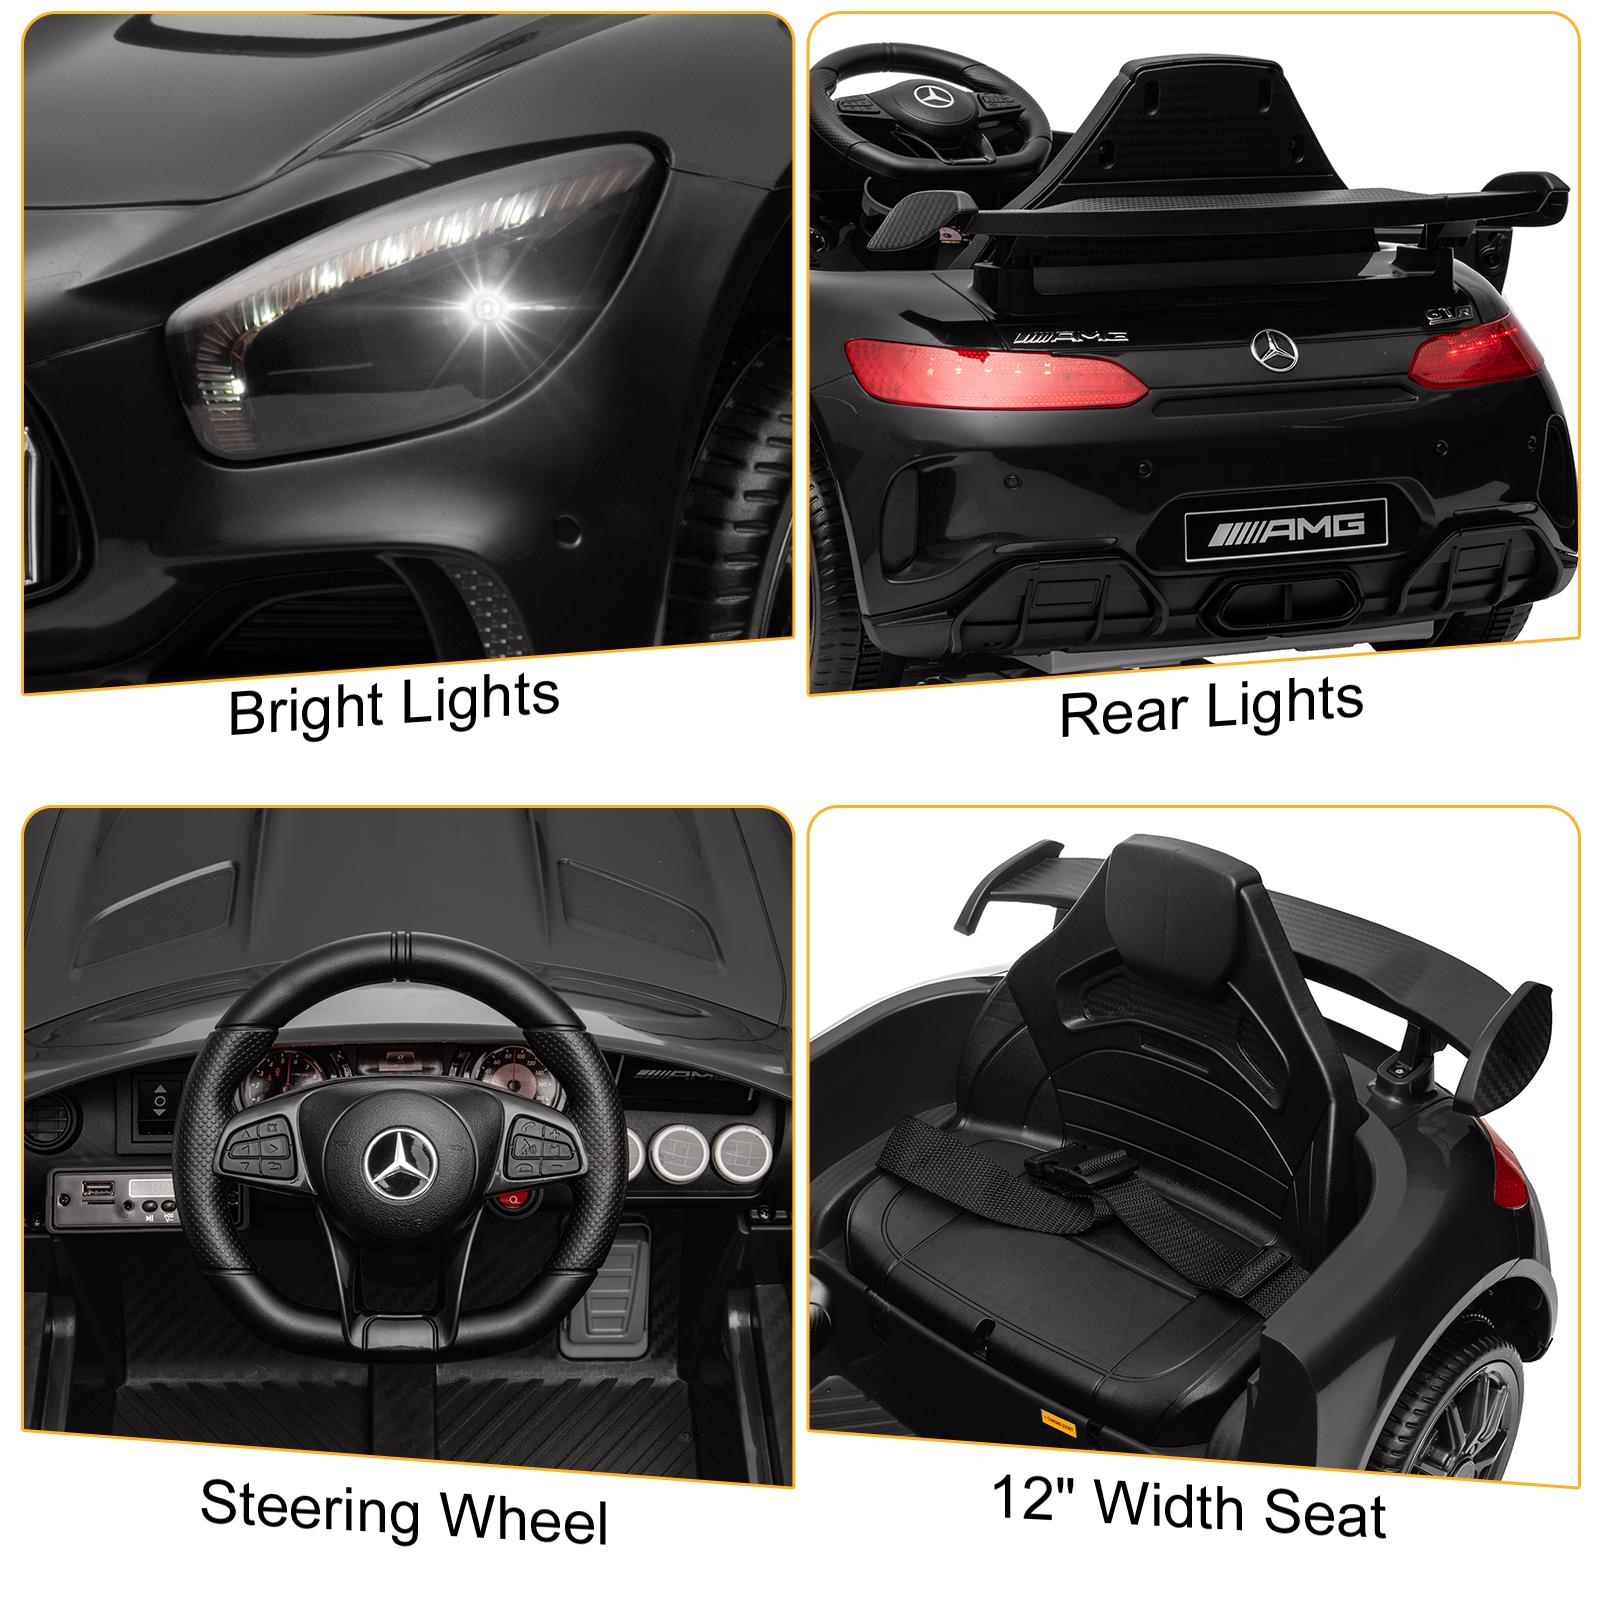 UBesGoo 12V Licensed Mercedes-Benz Electric Ride on Car Toy for Toddler Kid w/ Remote Control, LED Lights, Black - image 4 of 11